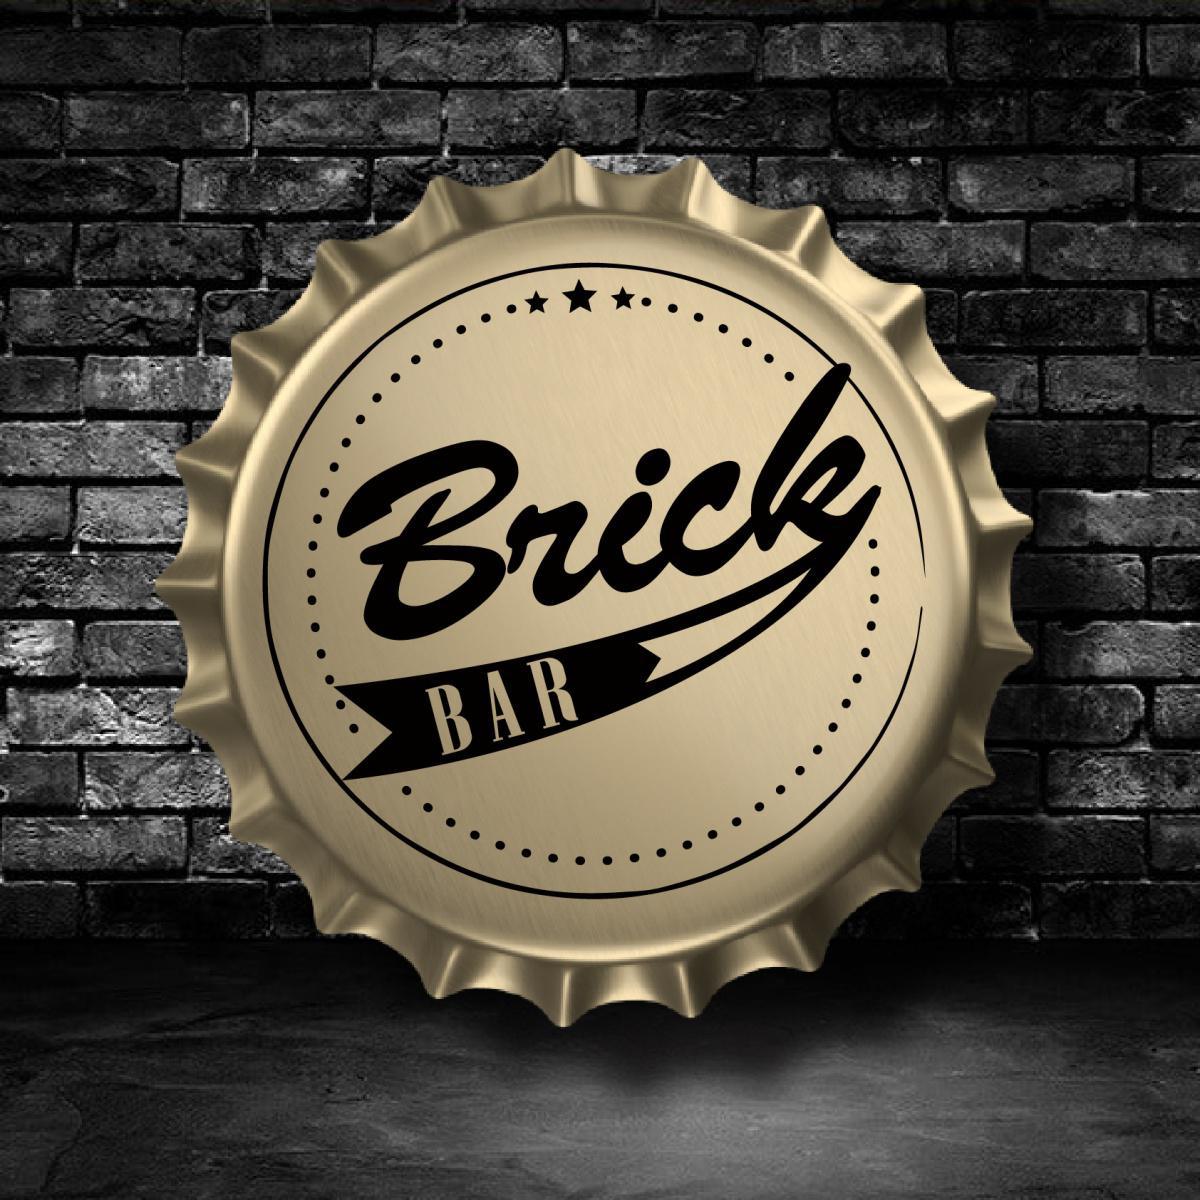 Brick Bar